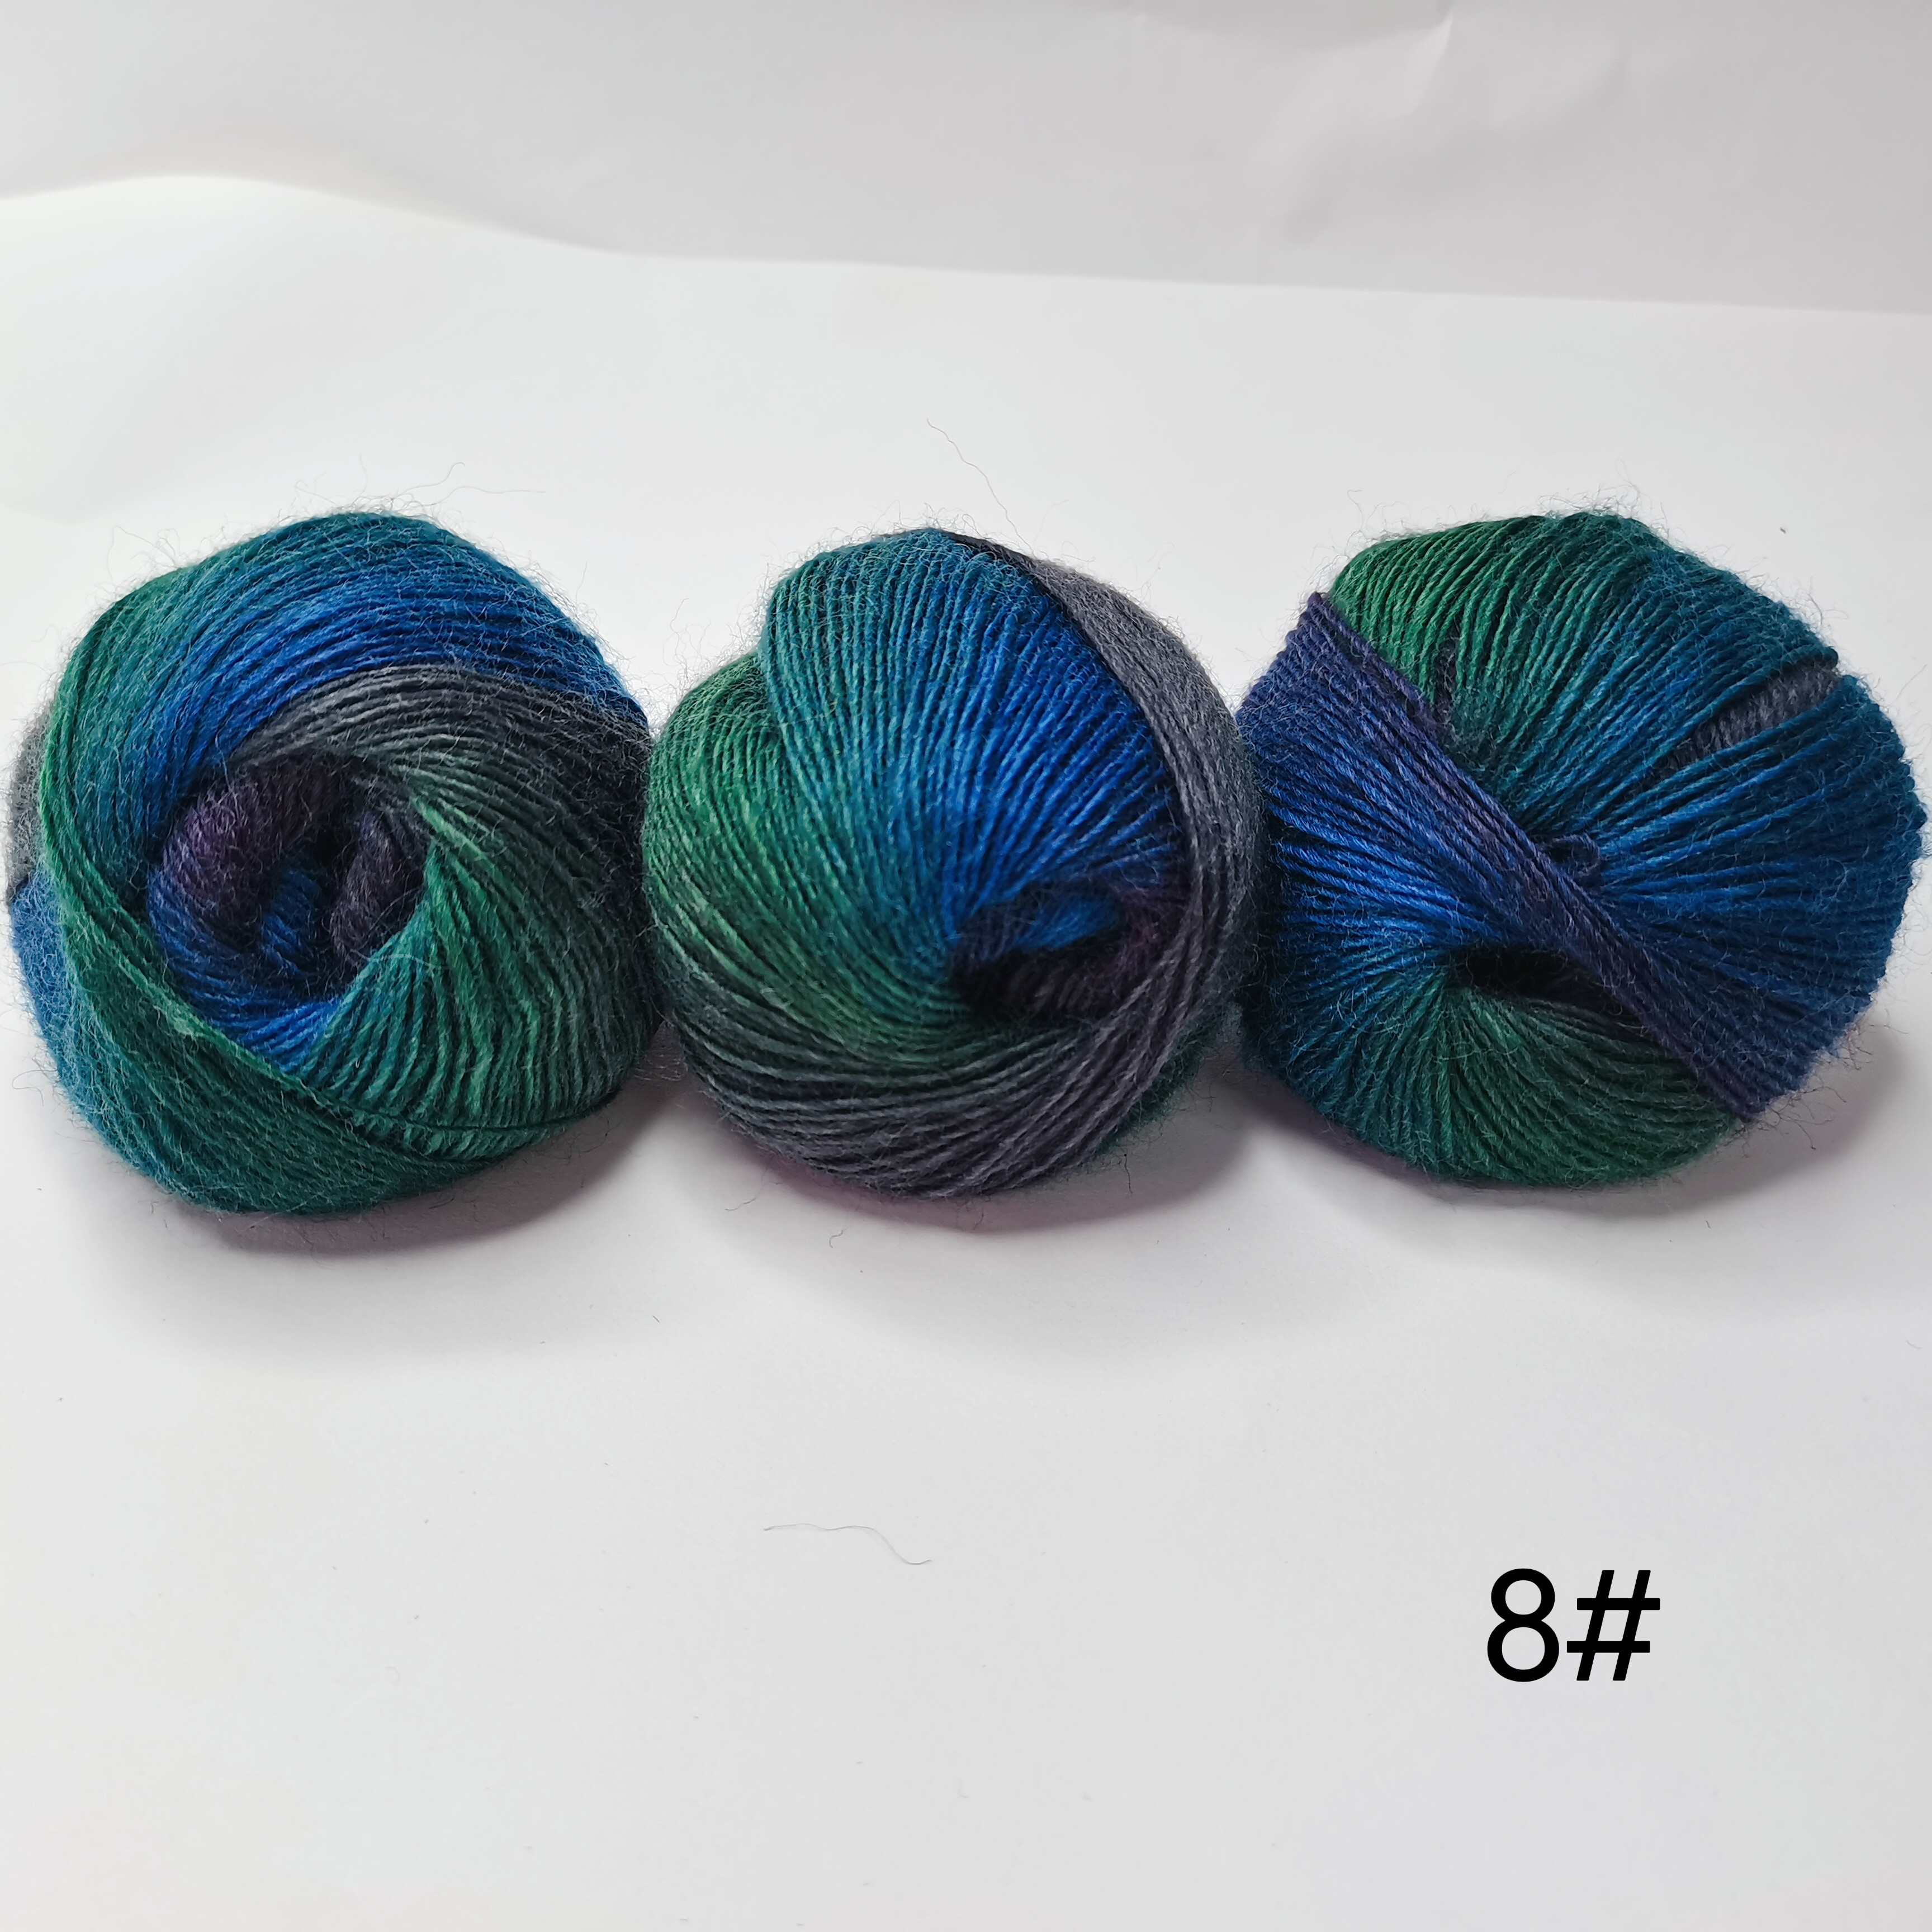 Rainbow Yarn, Handspun Thick and Thin Yarn, Colorful Yarn, Bulky Yarn,  Superwash Merino Yarn, Textured Yarn, Fluffy Yarn, Knitting Wool 